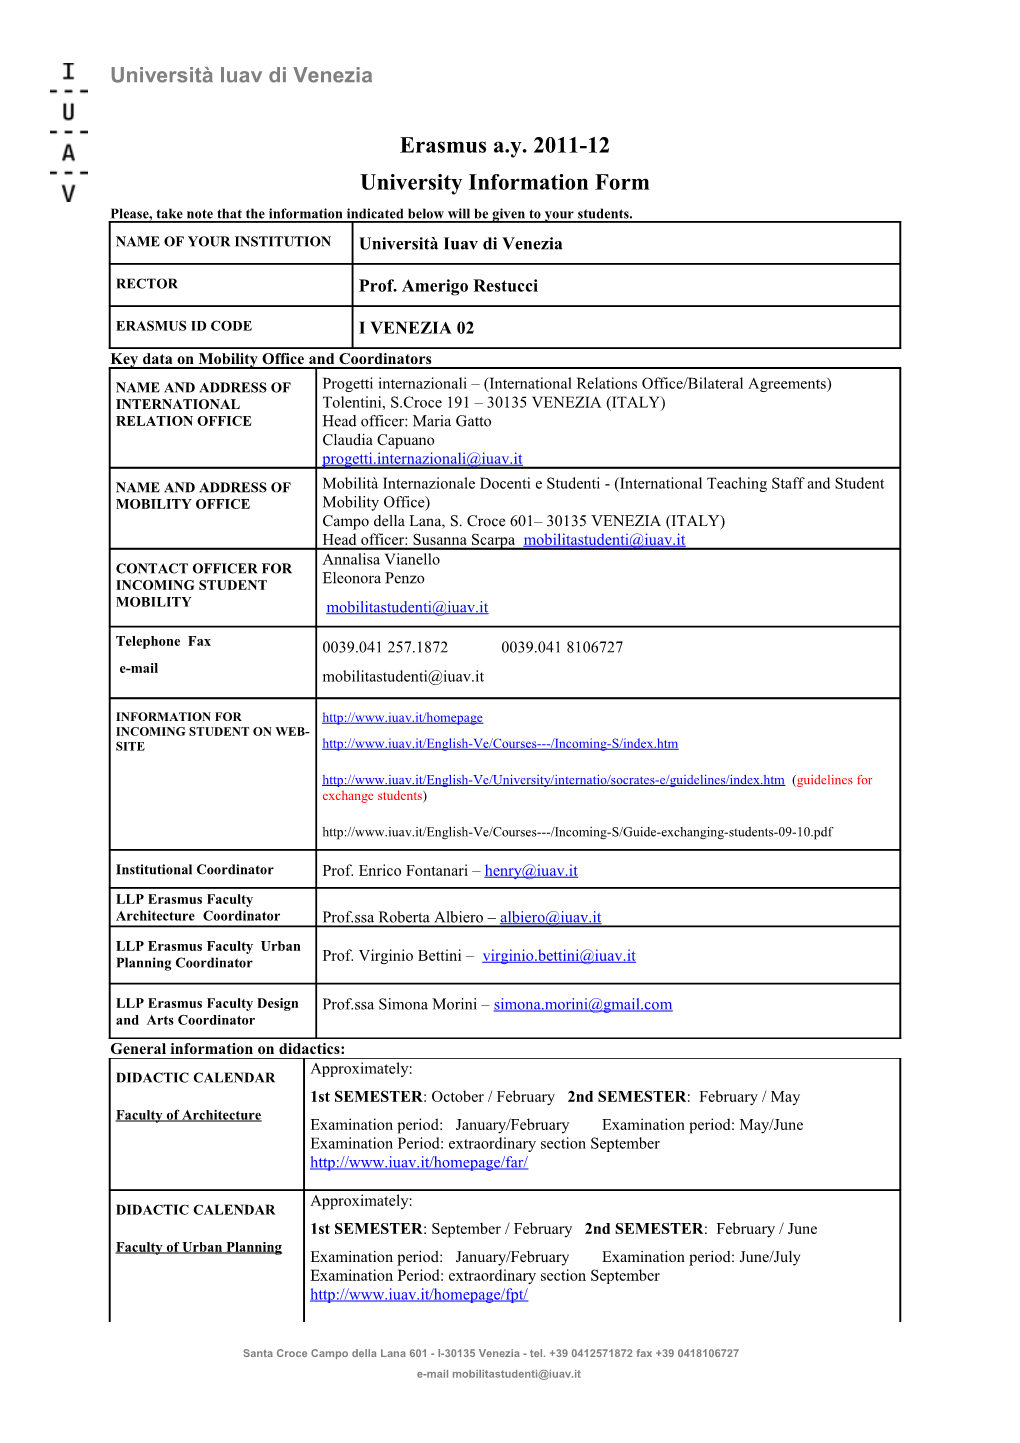 University Information Form